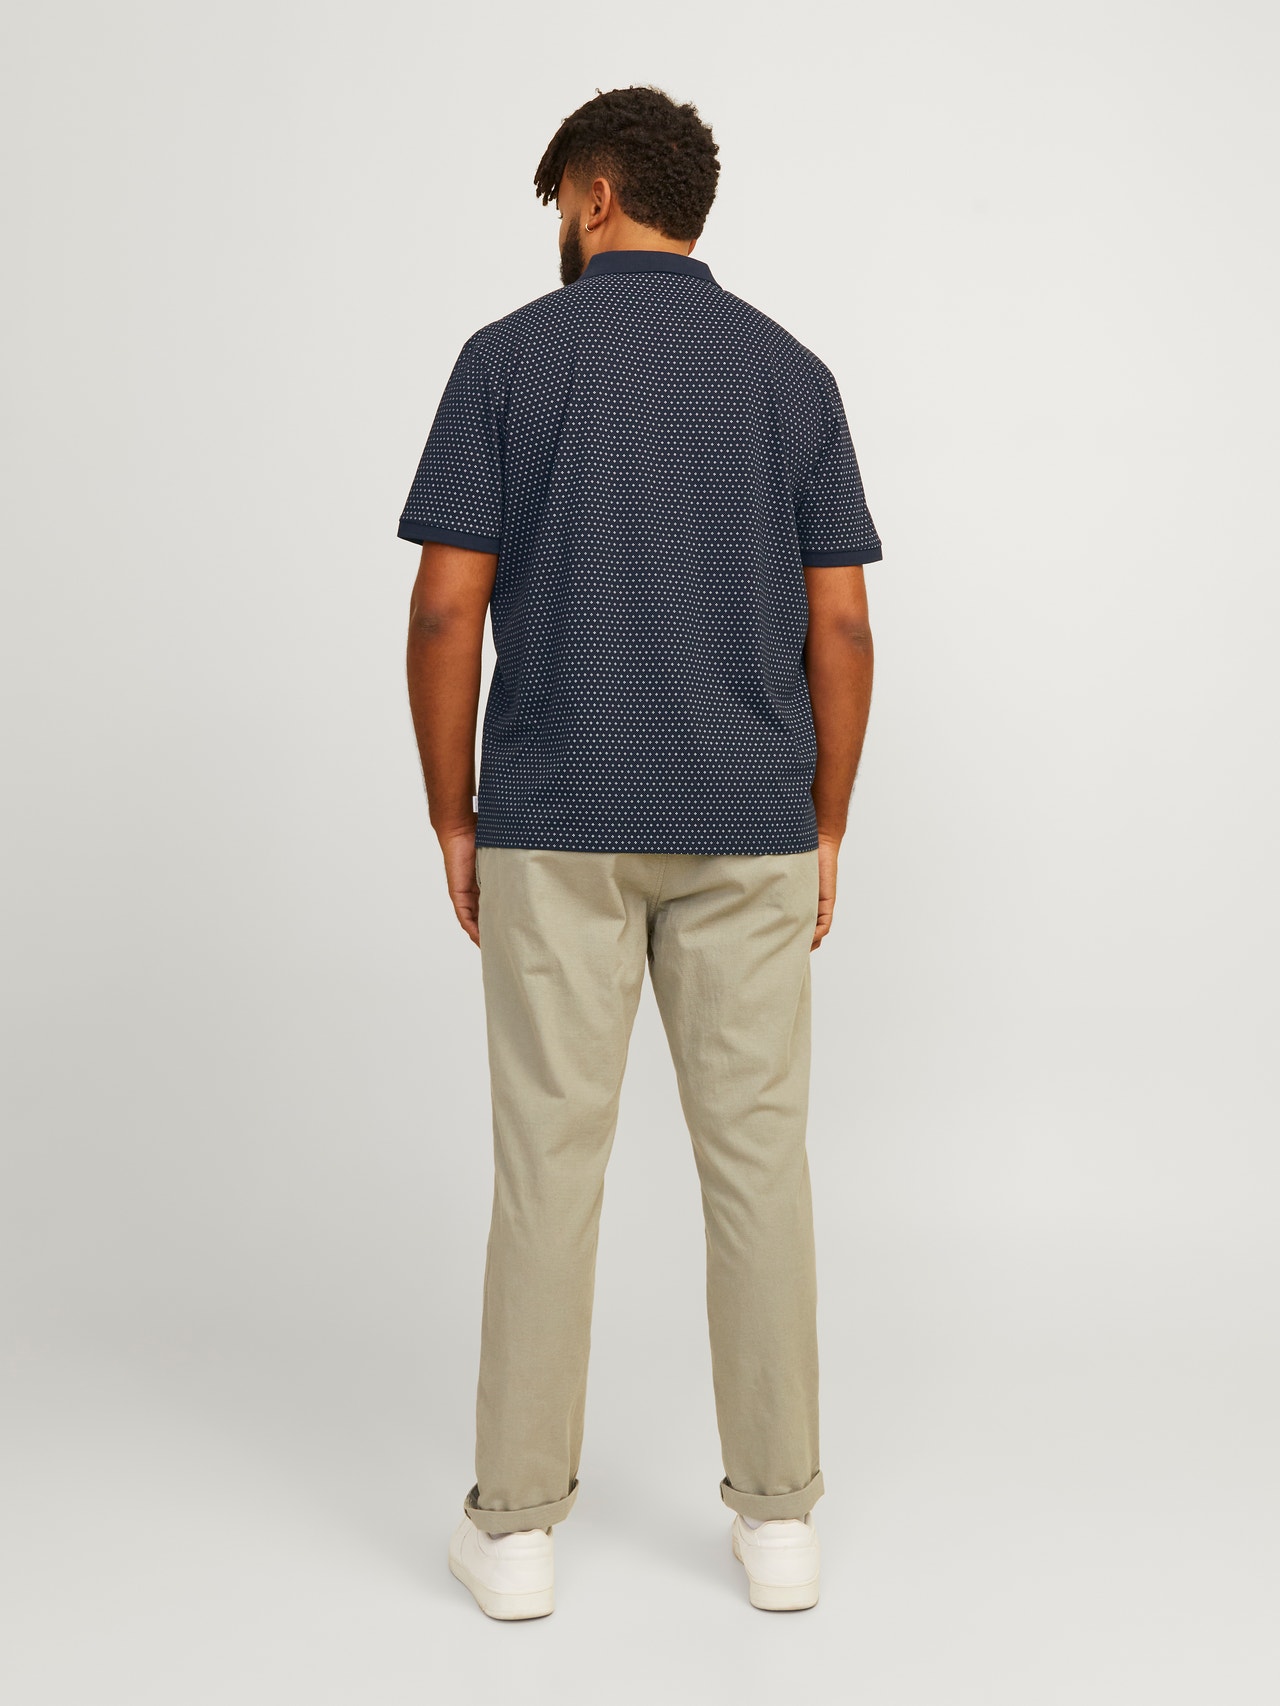 Jack & Jones Plus Size Gedrukt T-shirt -Navy Blazer - 12254901